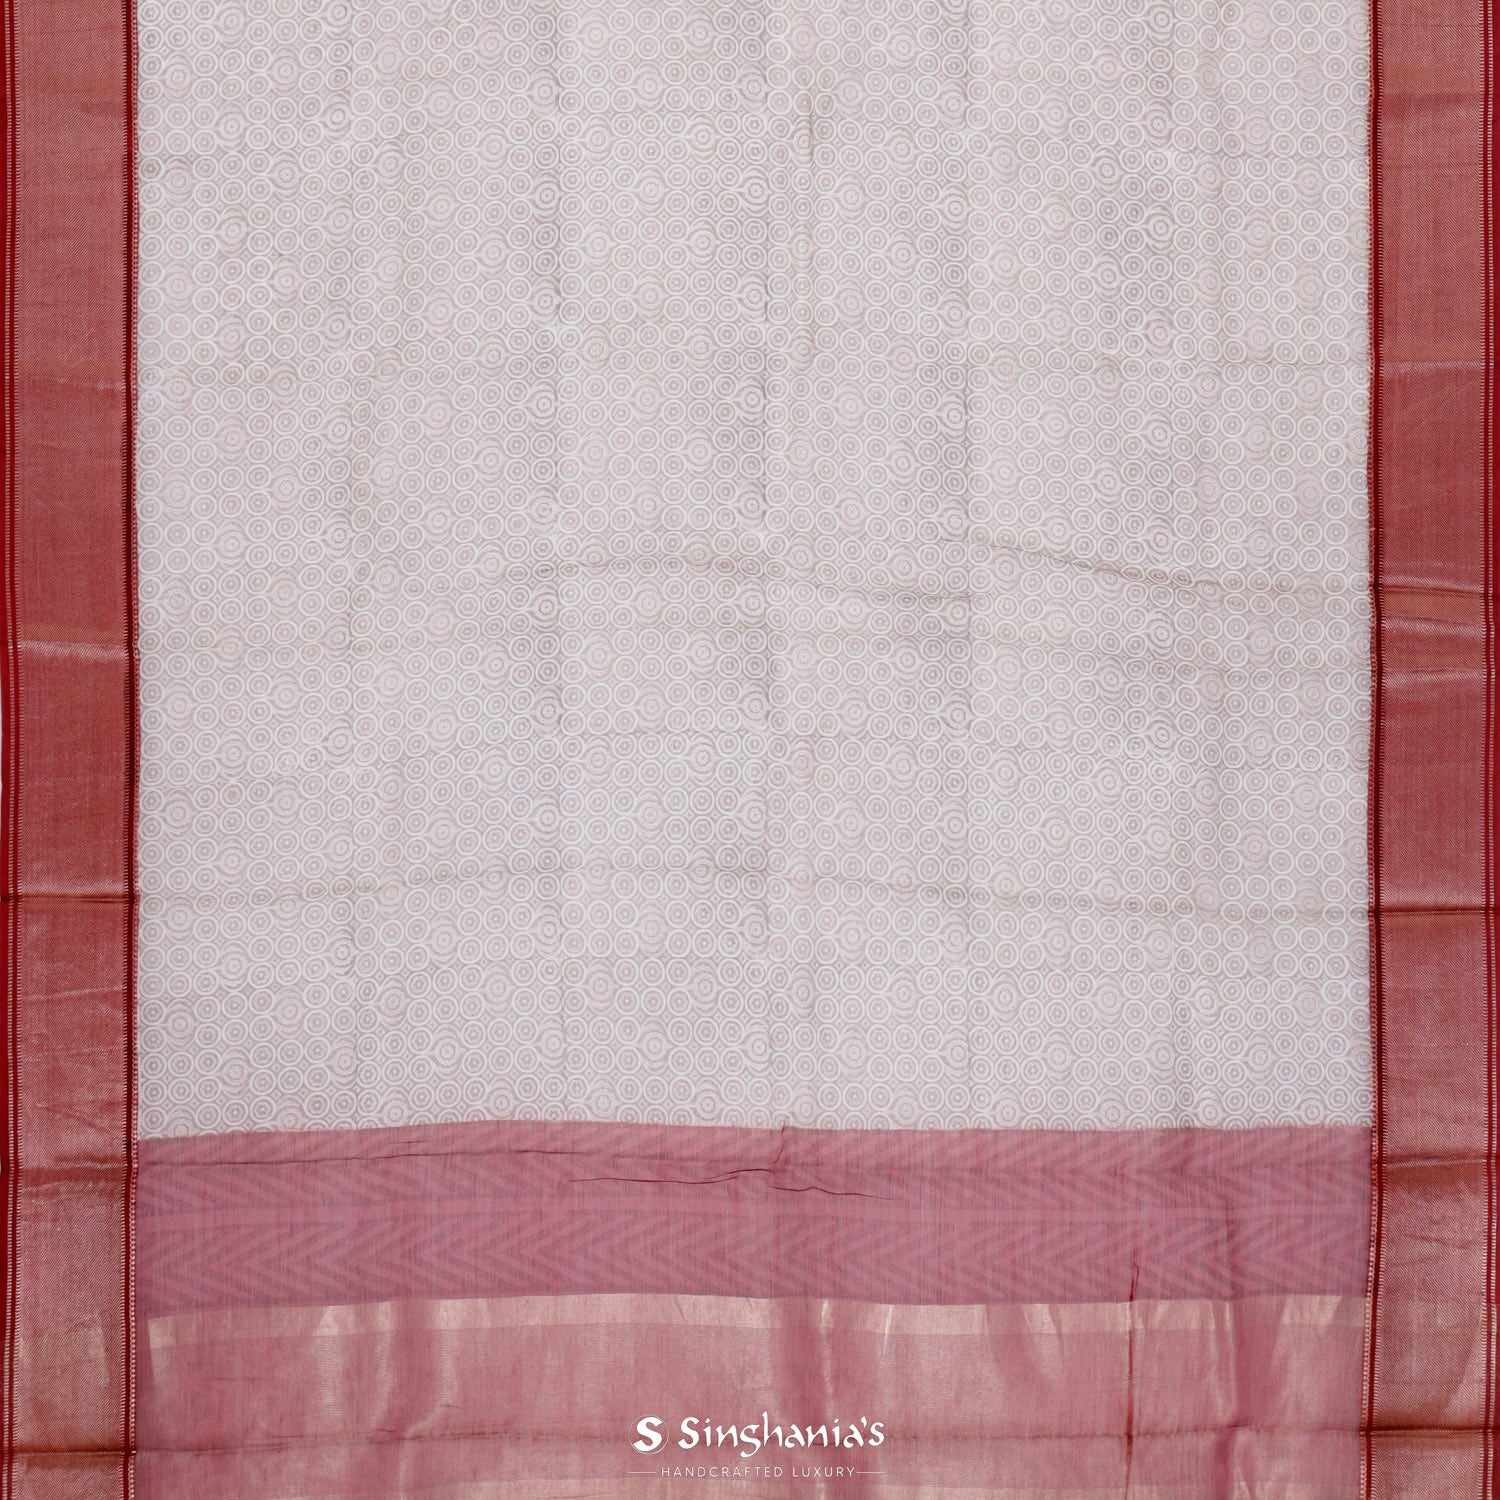 Lace Brown Printed Maheshwari Saree With Floral Pattern